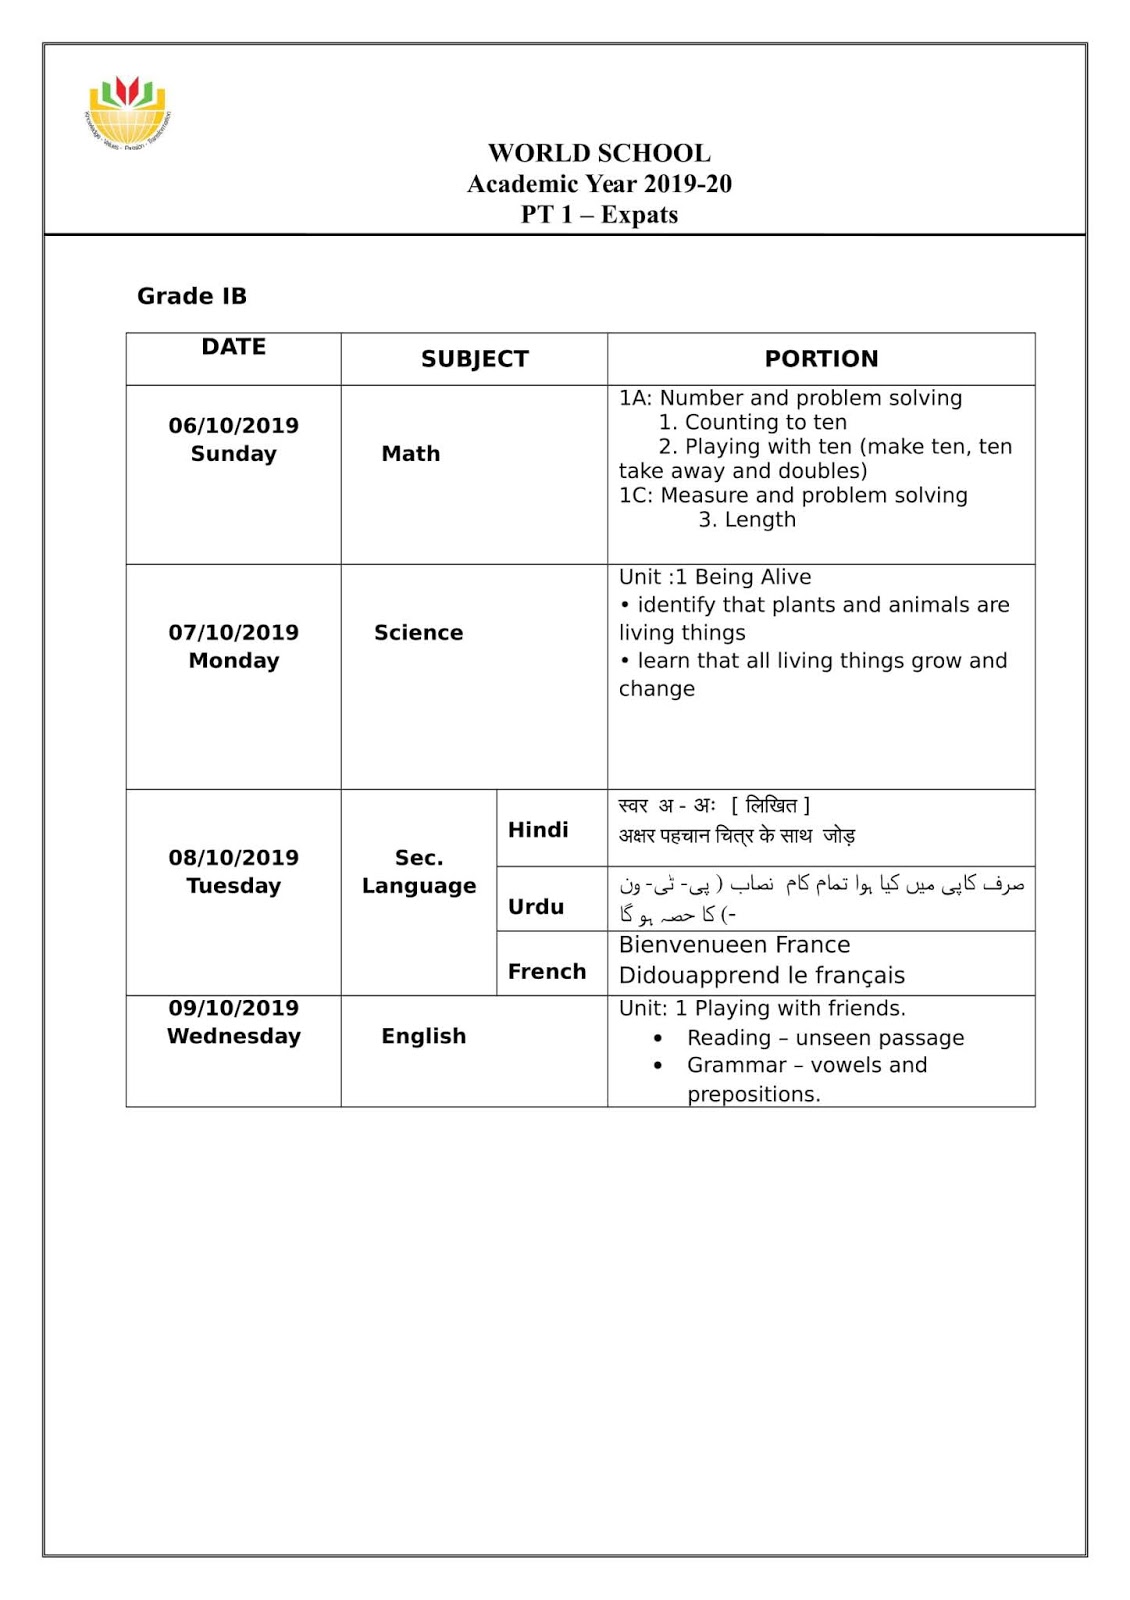 birla-world-school-oman-pt-1-syllabus-for-grade-1